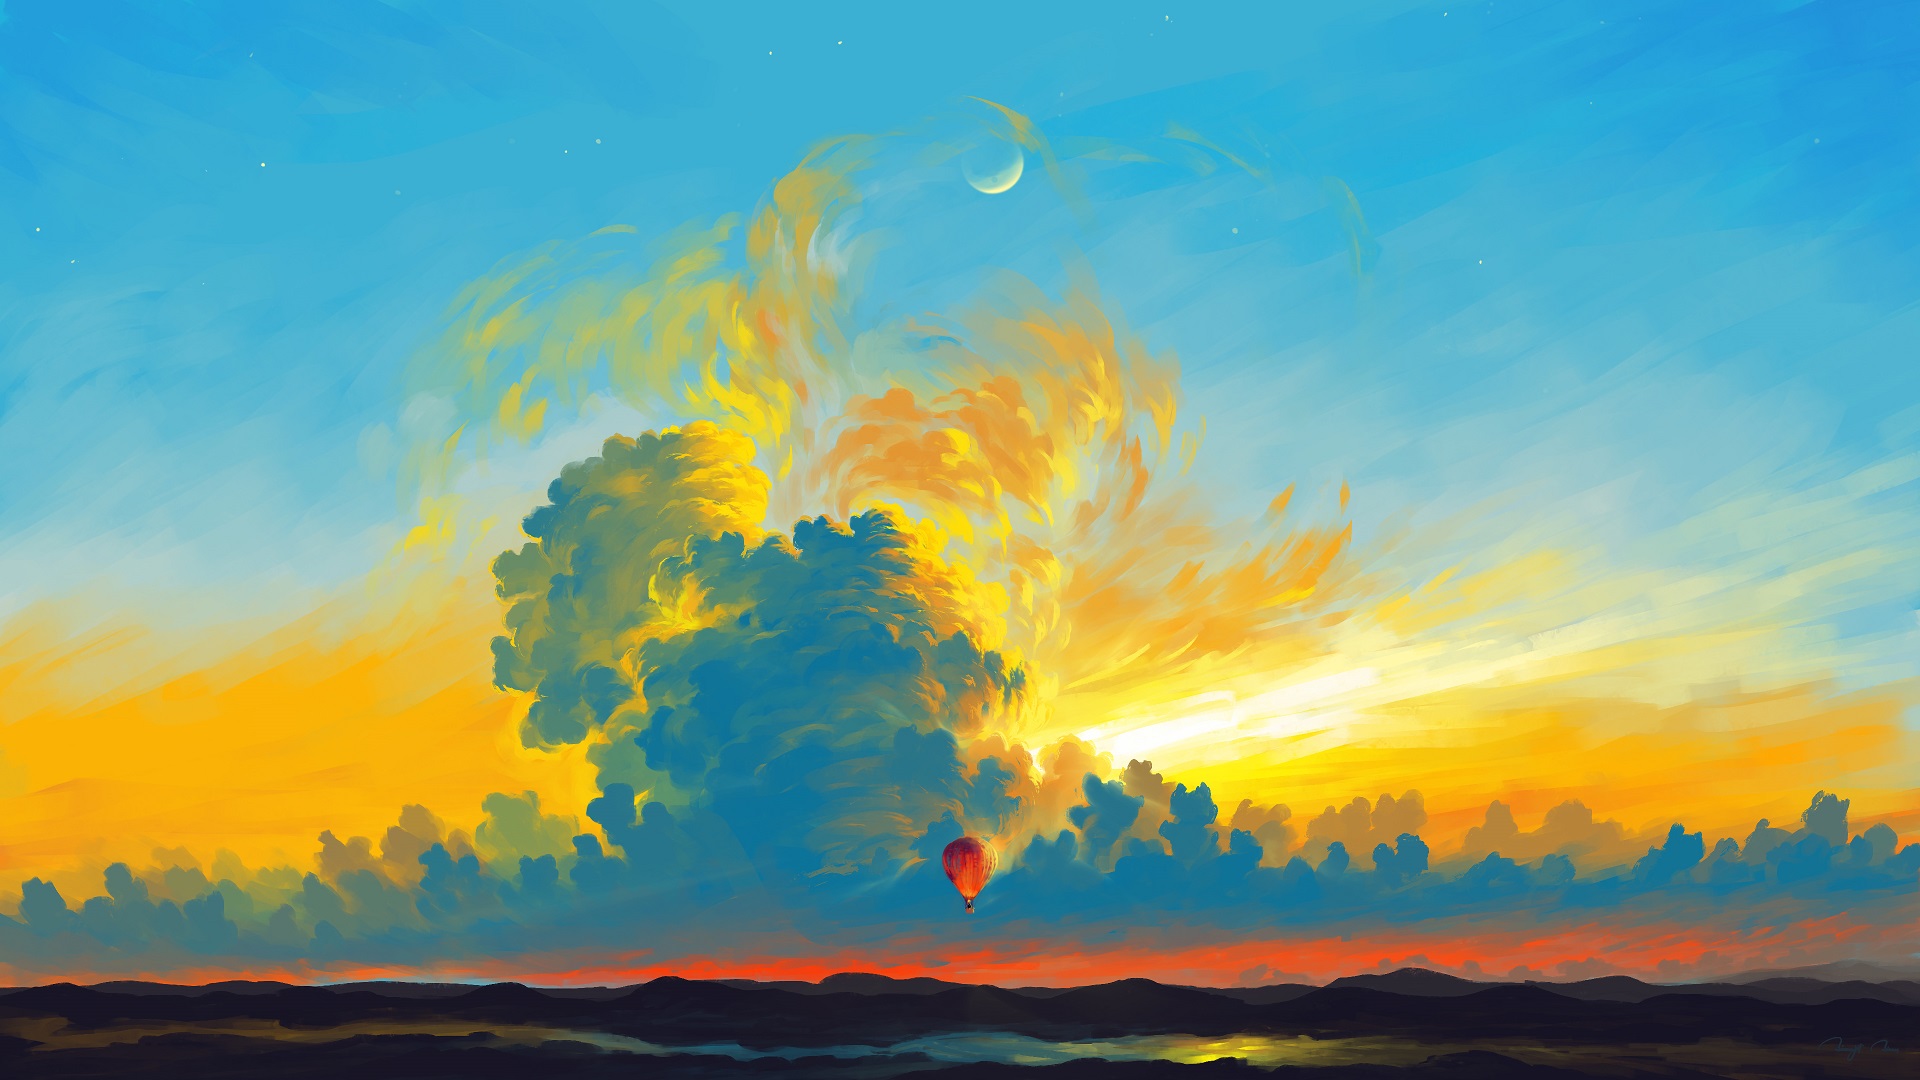 BisBiswas Digital Art Illustration Artwork Landscape Clouds Hot Air Balloons Mountains Sky Moon 1920x1080